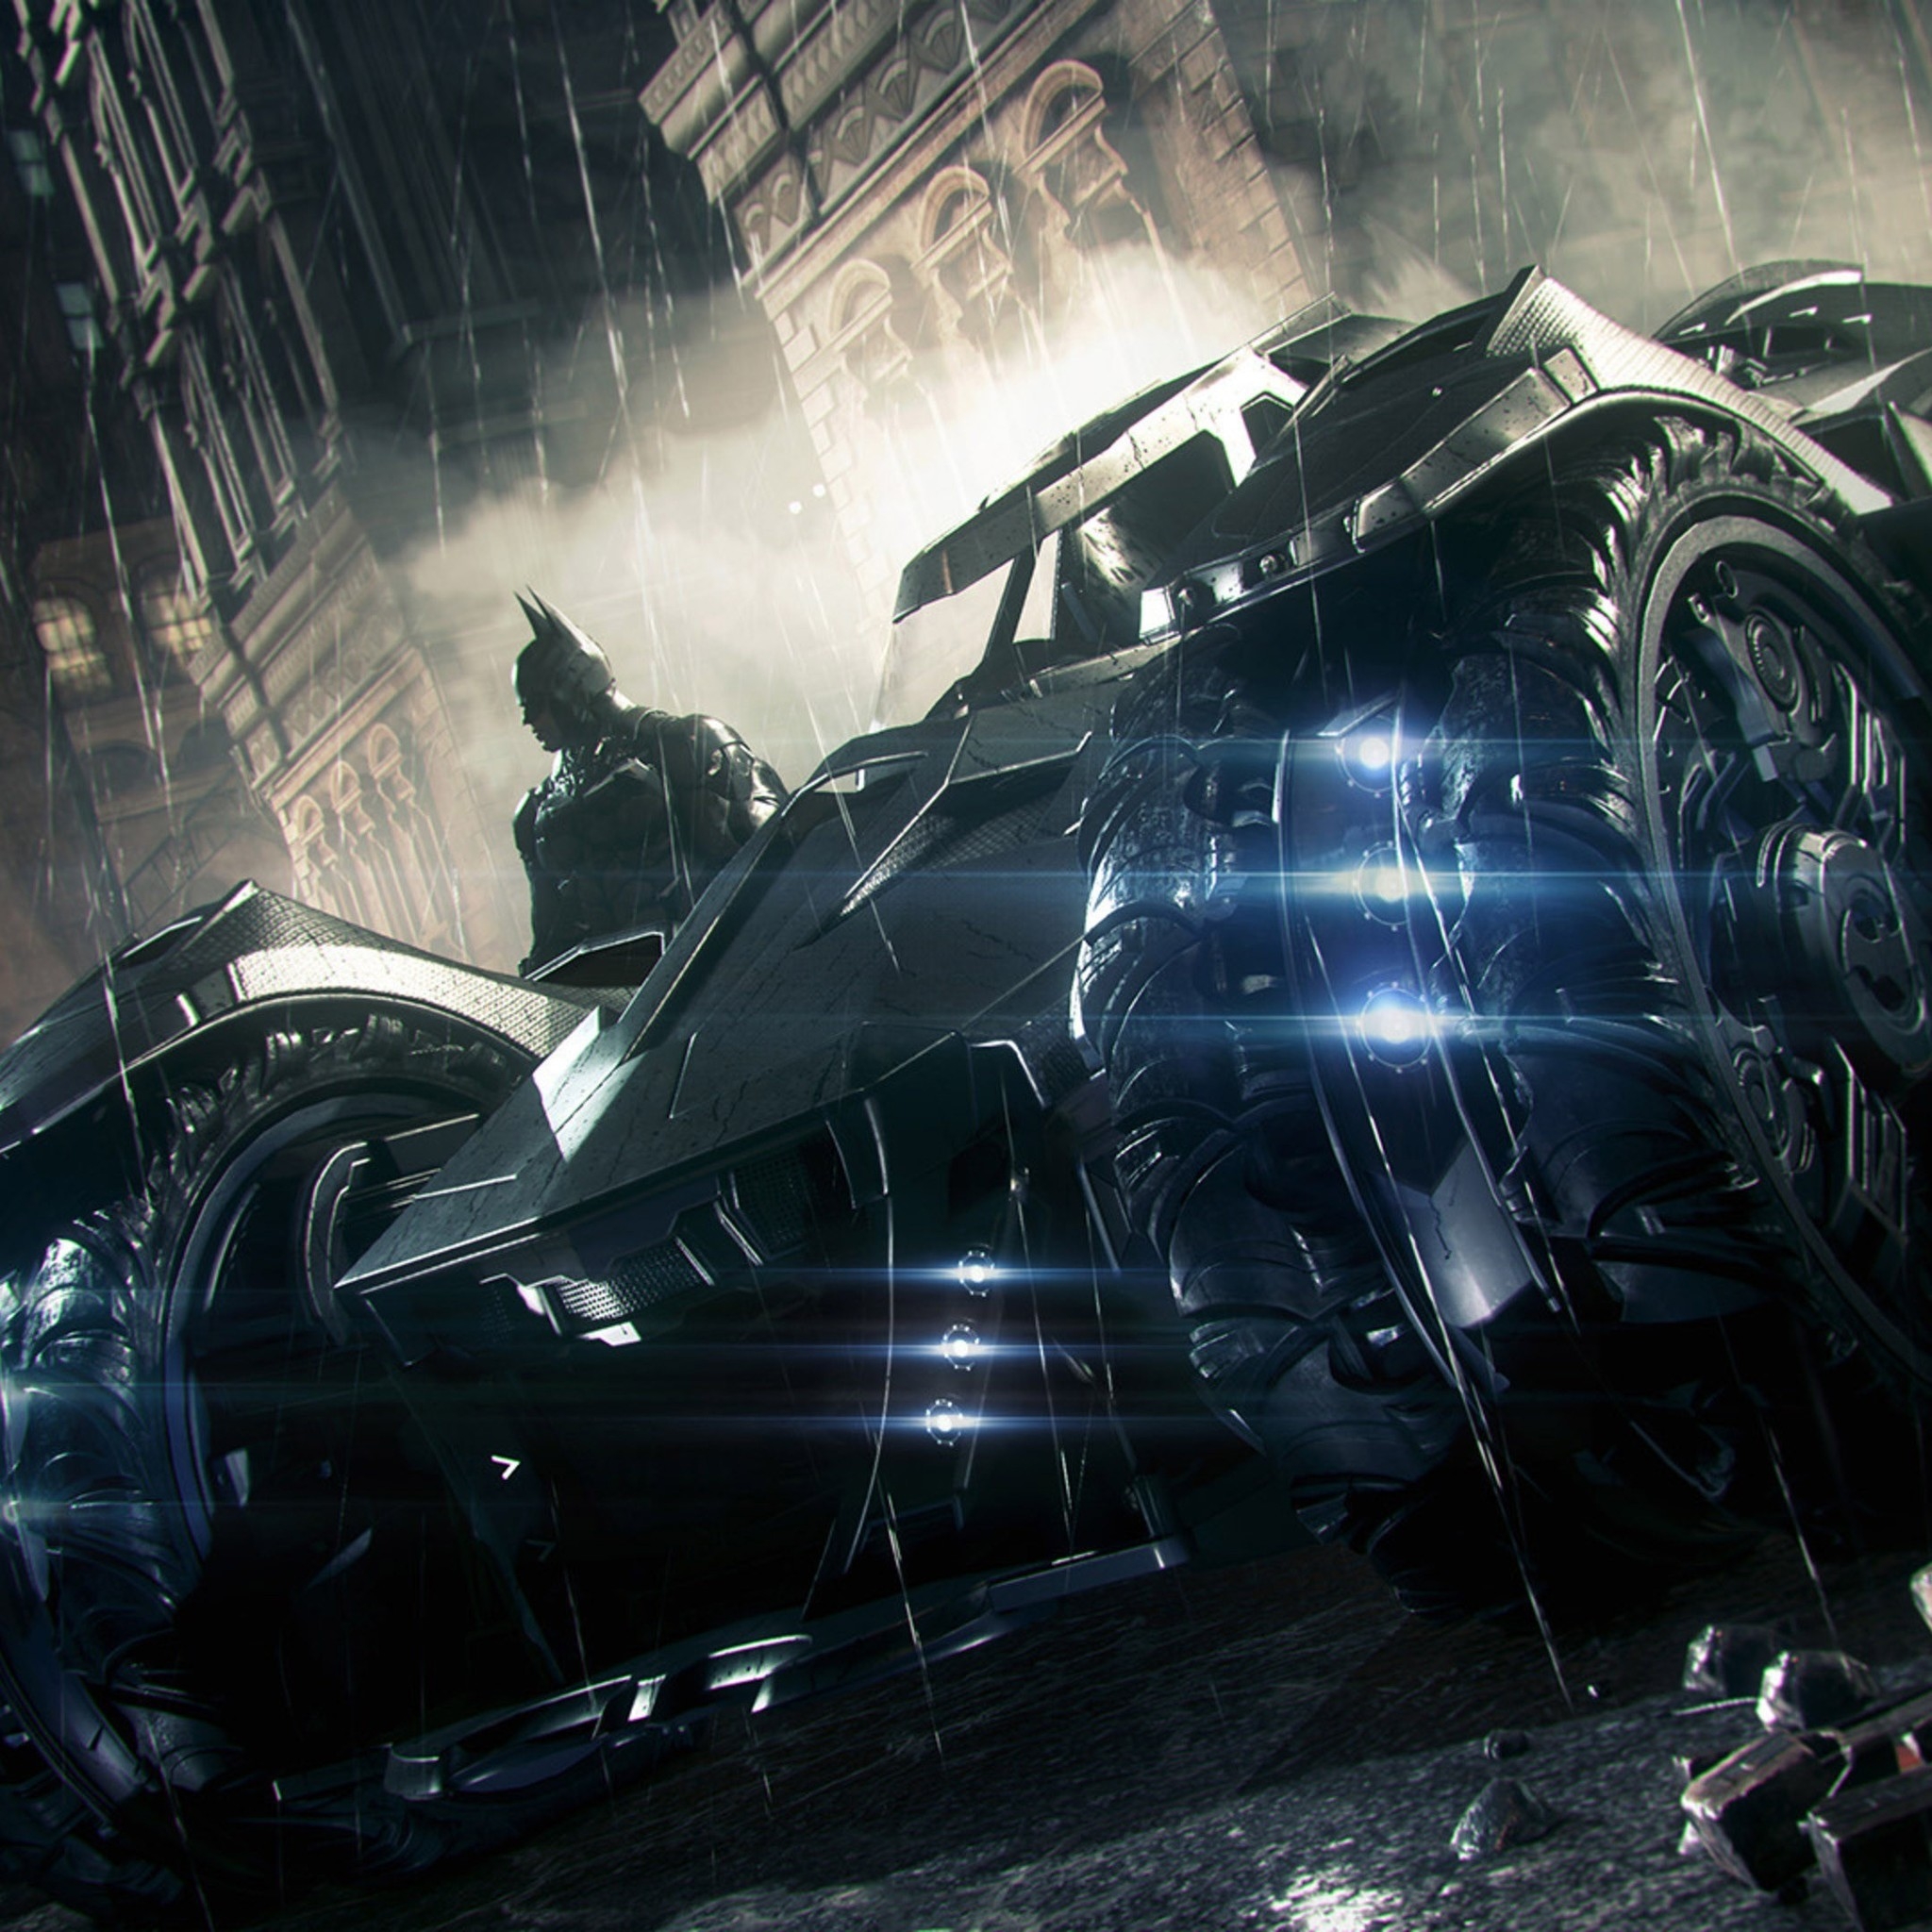 Batman Arkham Knight 3 Car for 2048 x 2048 New iPad resolution